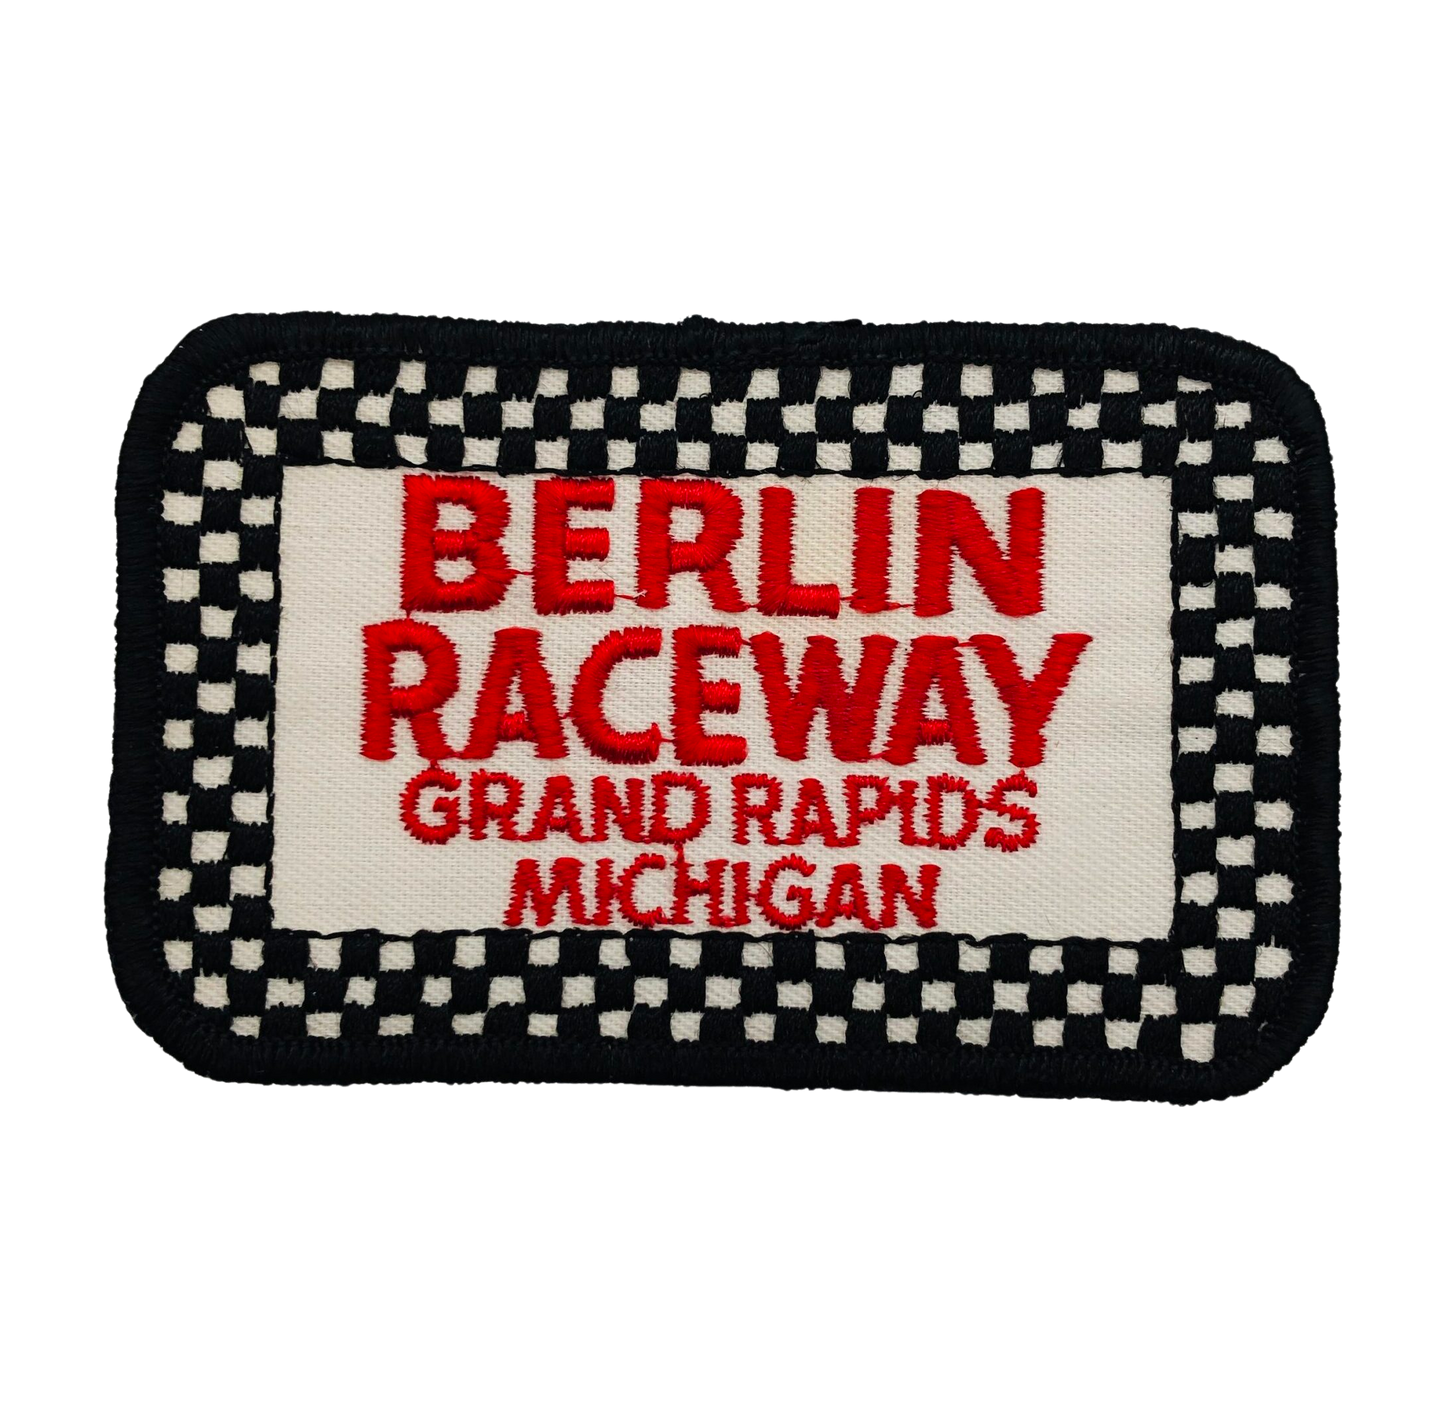 Vintage BERLIN RACEWAY SPEEDWAY Grand Rapids Michigan Patch